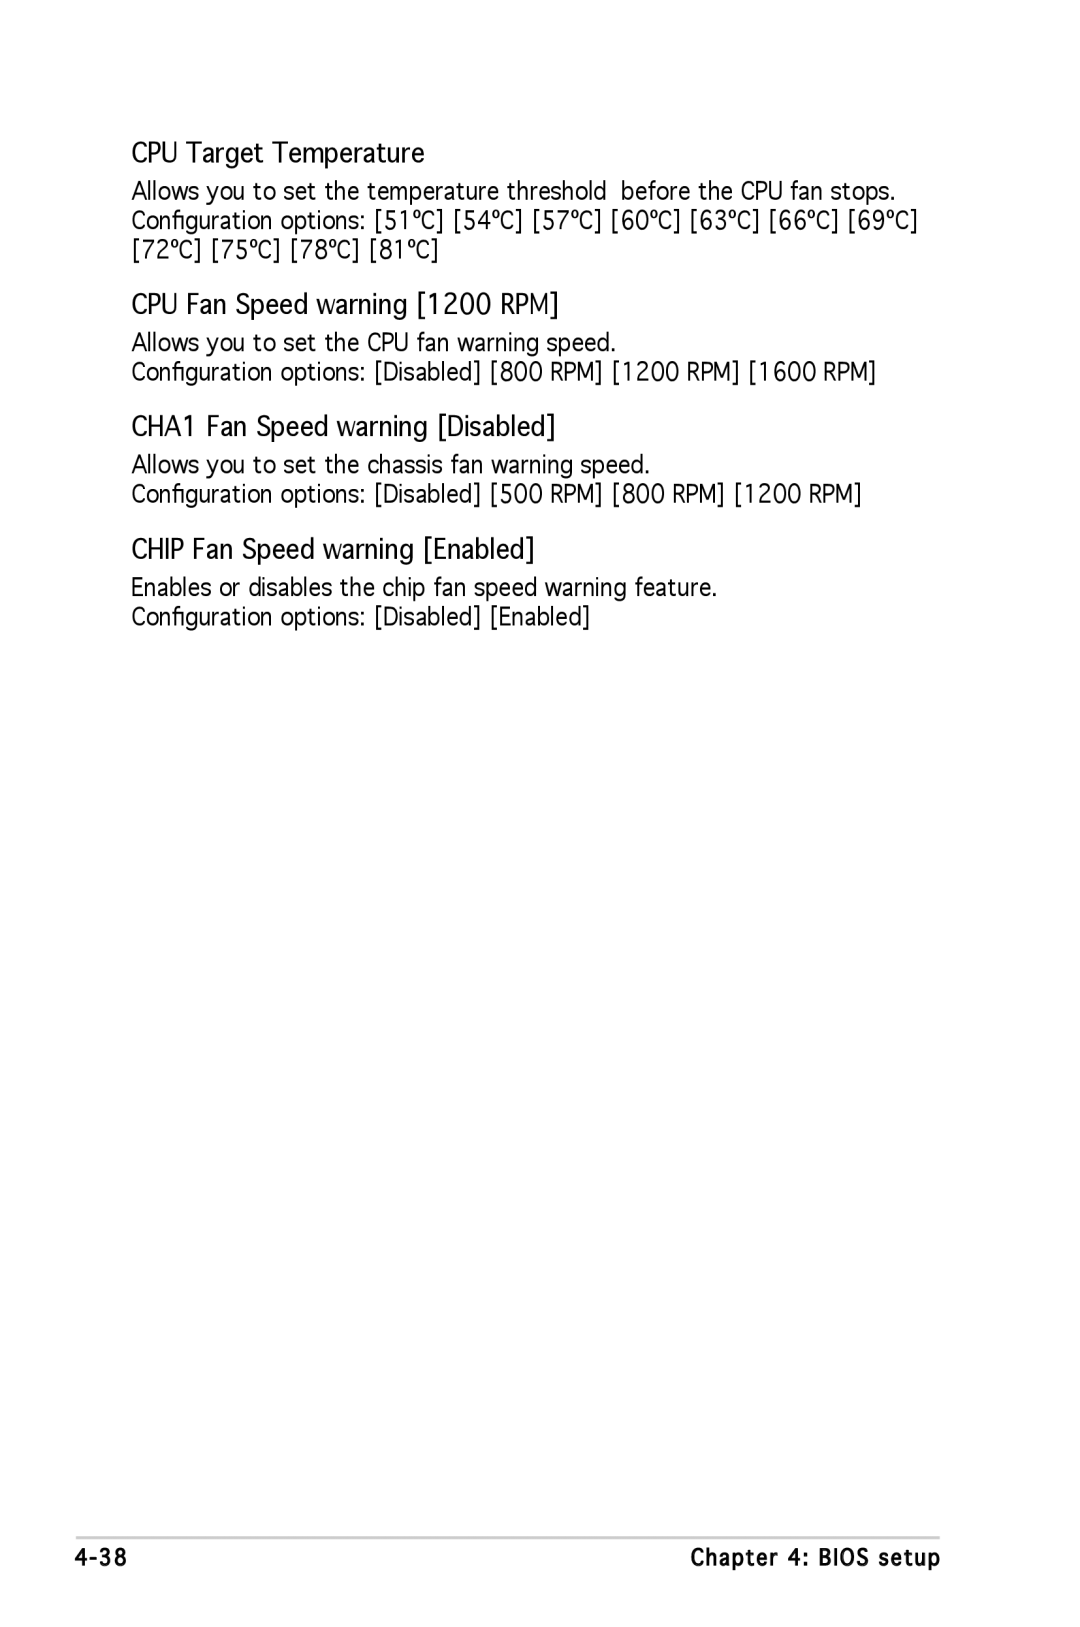 Asus A8N-SLI SE manual CPU Target Temperature, CPU Fan Speed warning 1200 RPM, CHA1 Fan Speed warning Disabled 